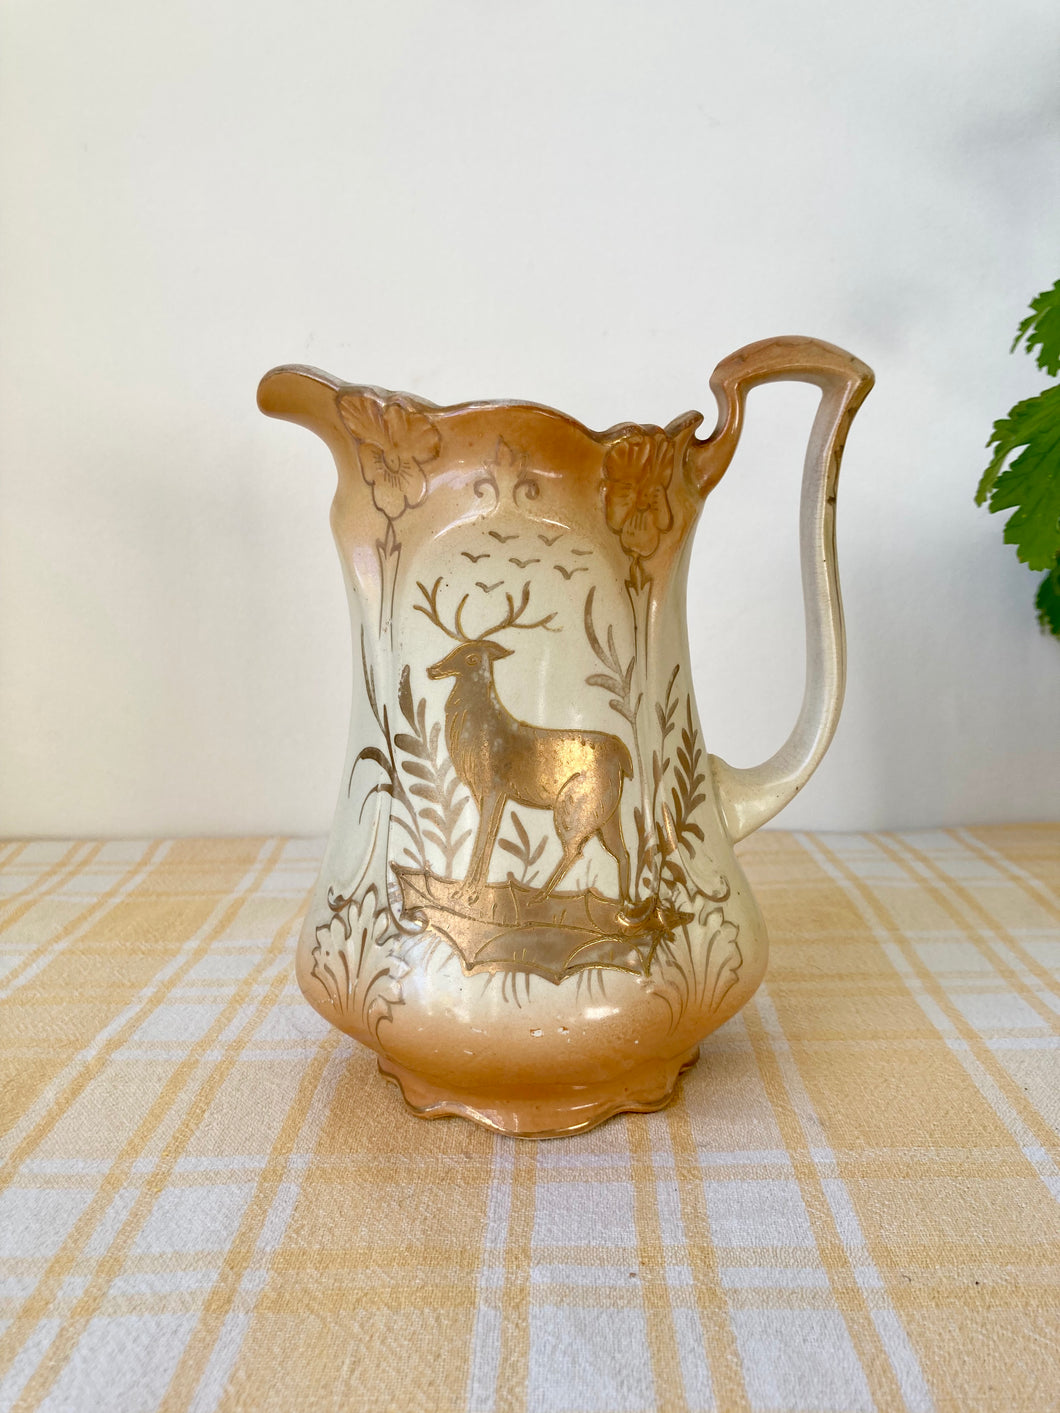 Blush and gilt jug with stag illustration